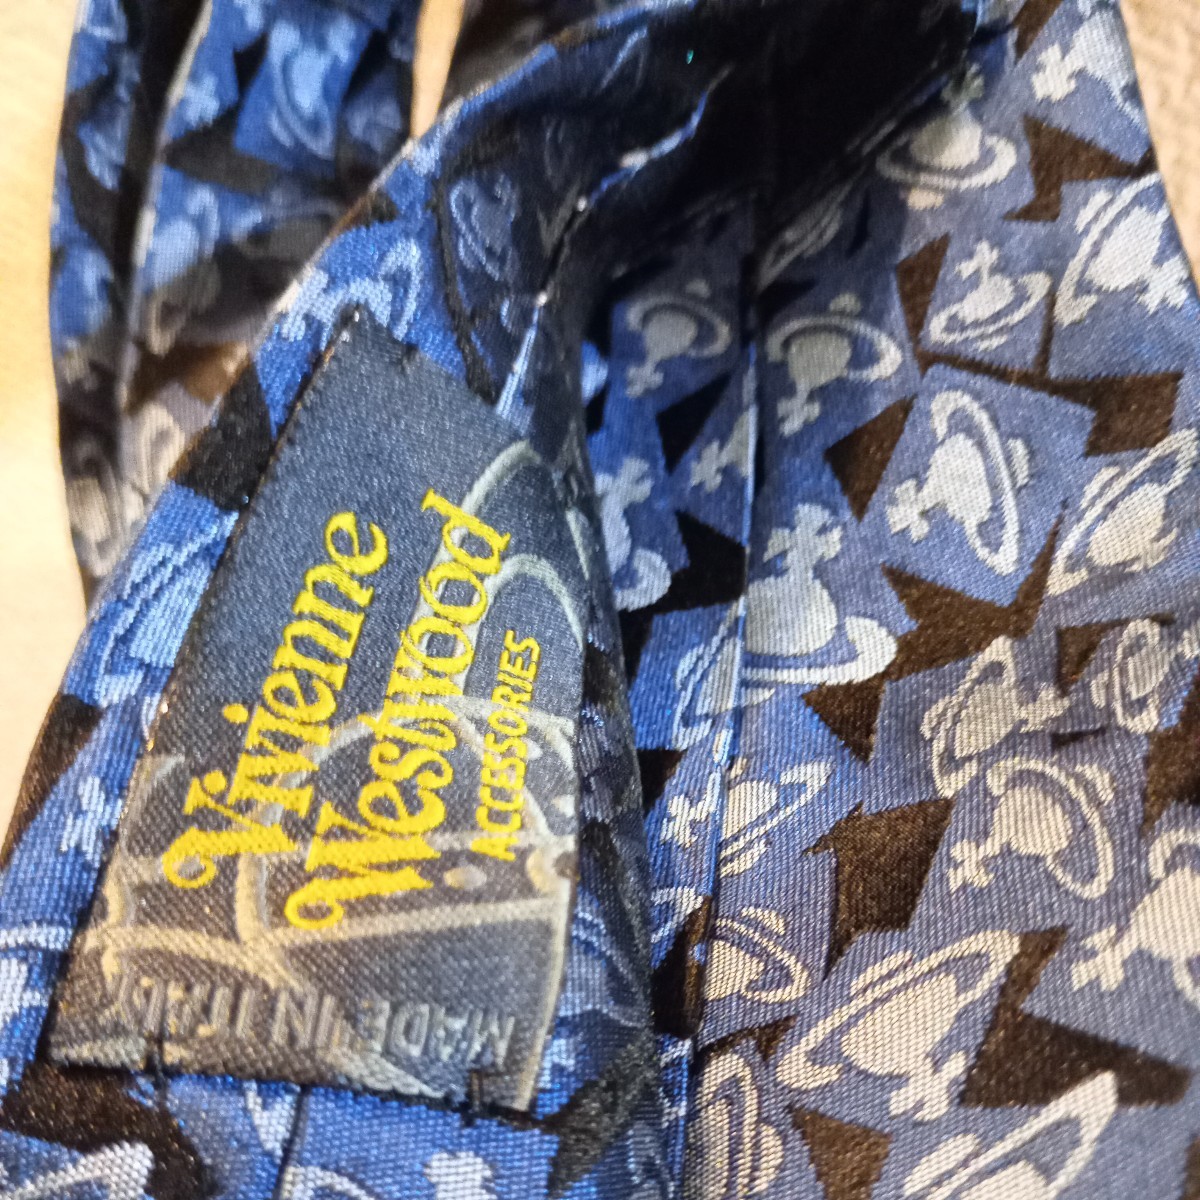 Vivienne Westwood man Vivienne Westwood аксессуары Италия производства шелк галстук o-b рисунок голубой 